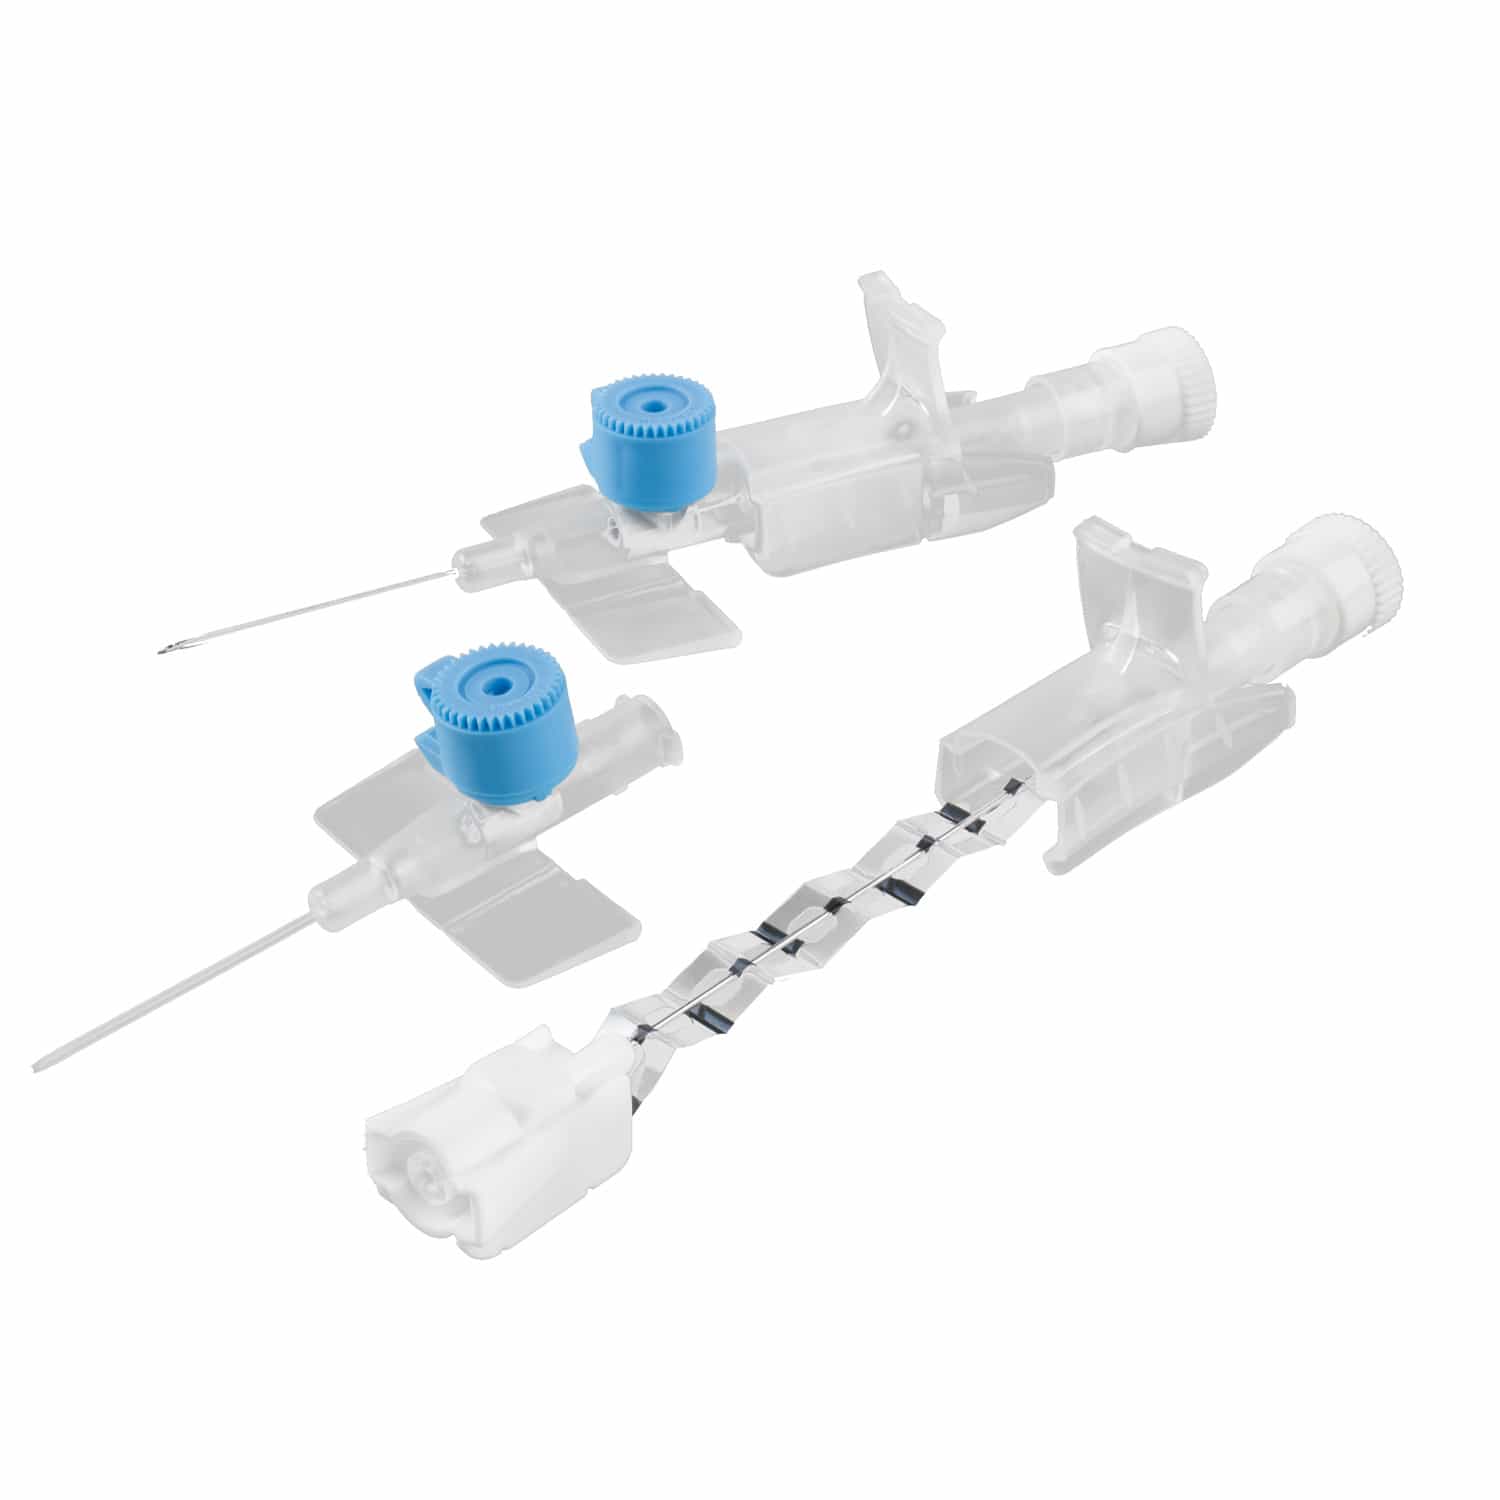 Venflon Pro Safety Safety Intravenous Catheters With Injection Valve